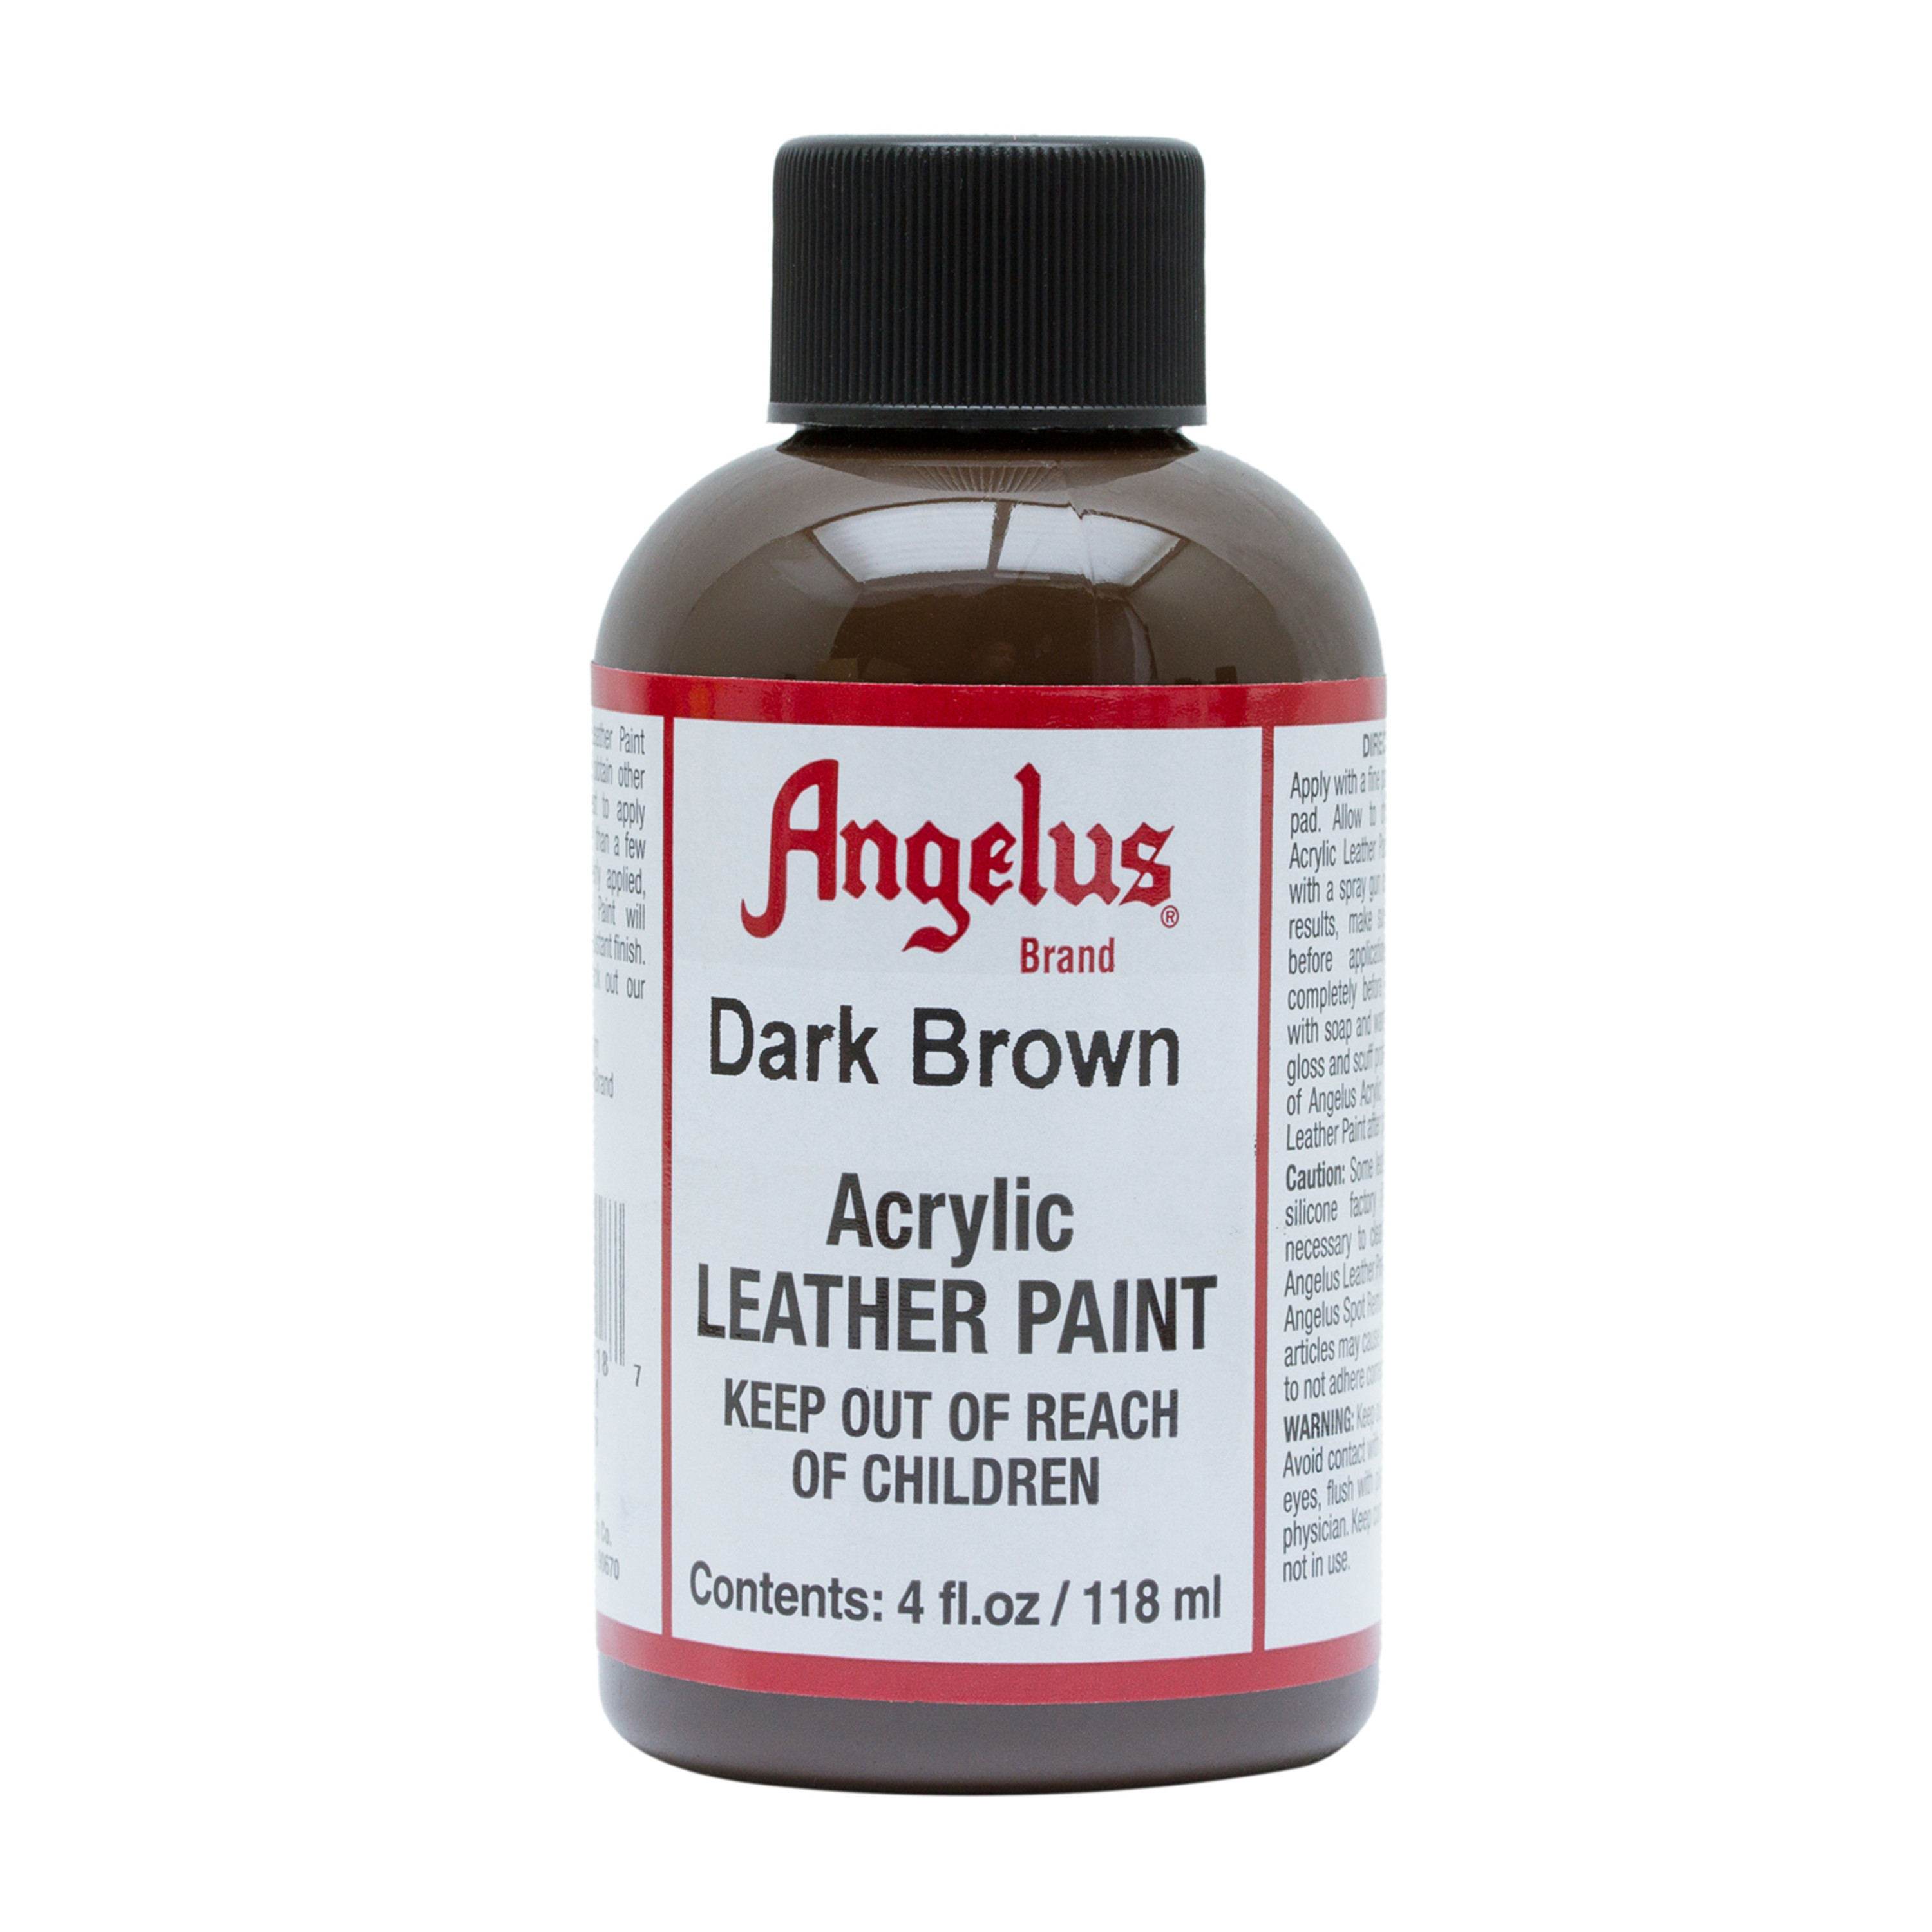 Angelus Acrylic Leather Paint 4 oz - Dark Brown